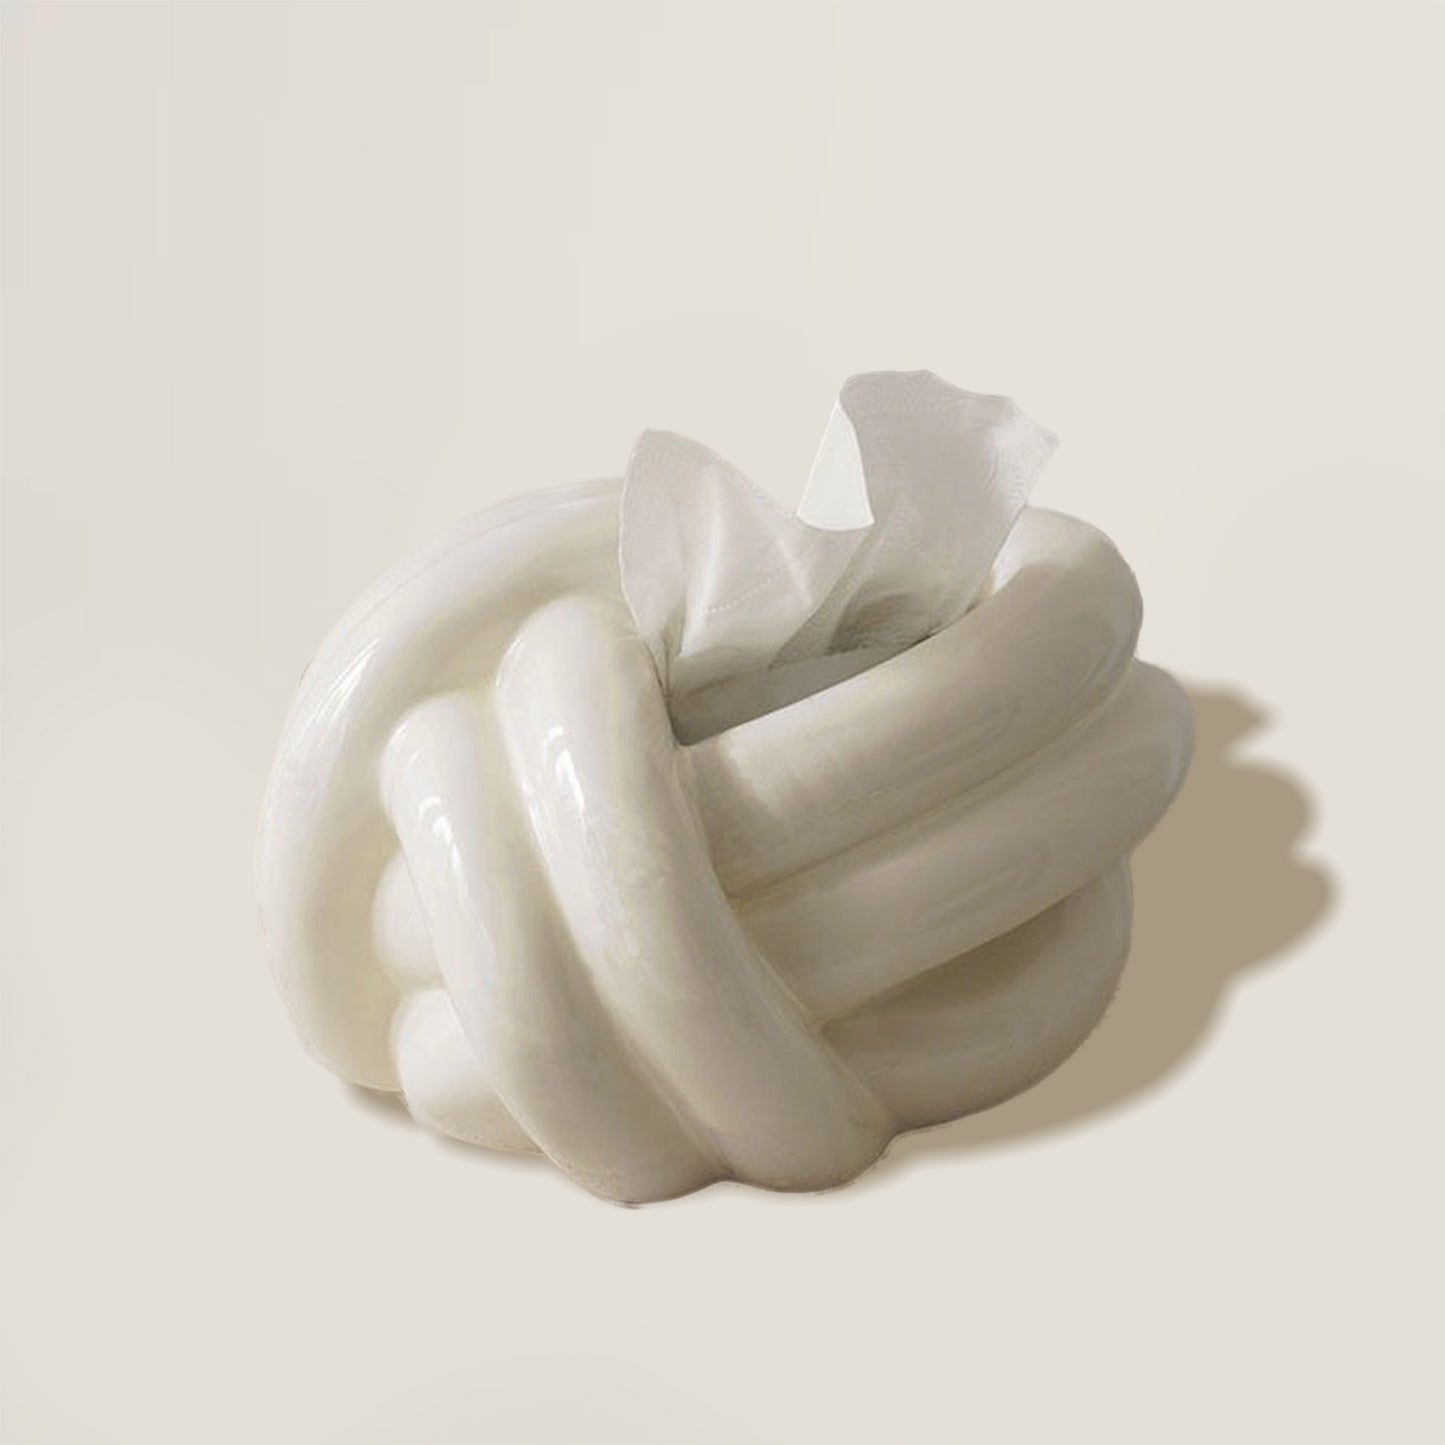 Knot Ceramic Tissues Box Holder